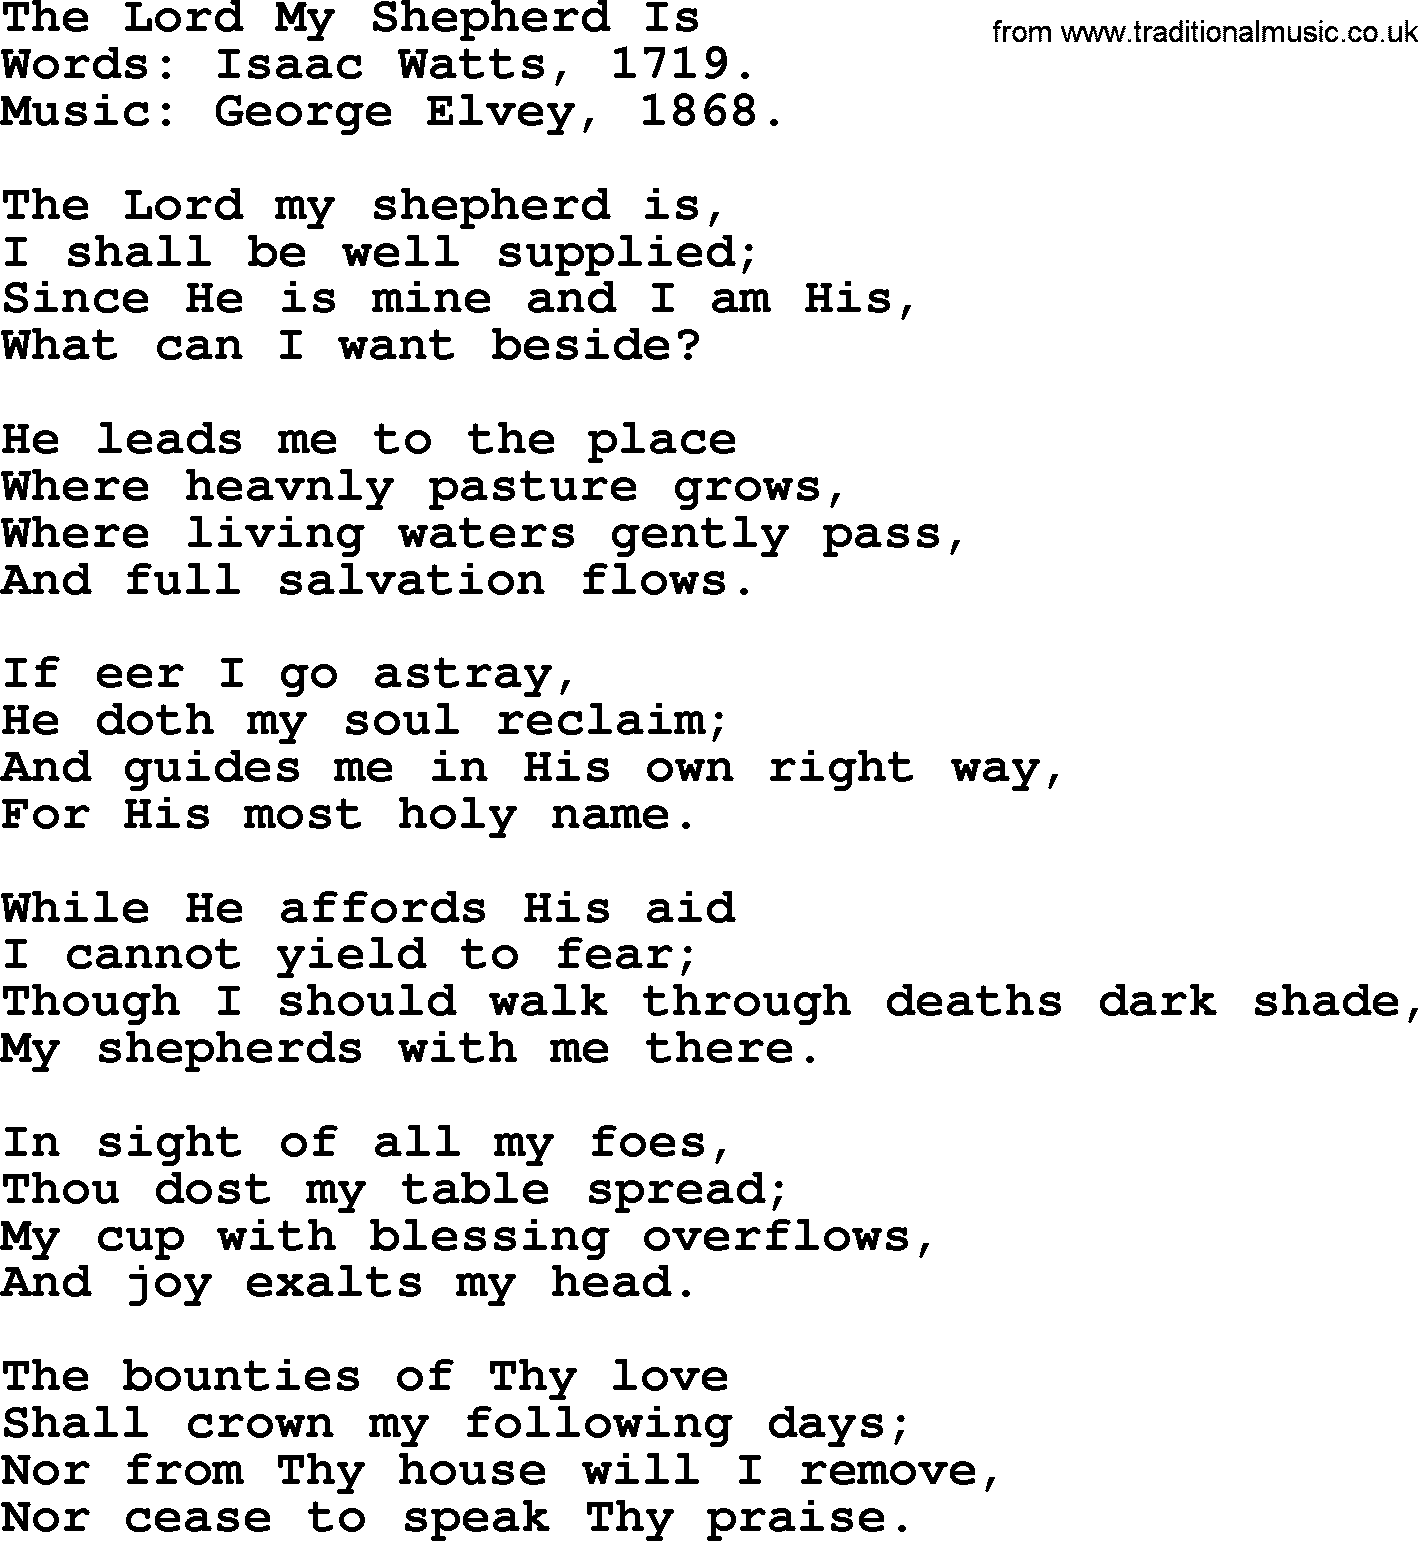 Isaac Watts Christian hymn: The Lord My Shepherd Is- lyricss